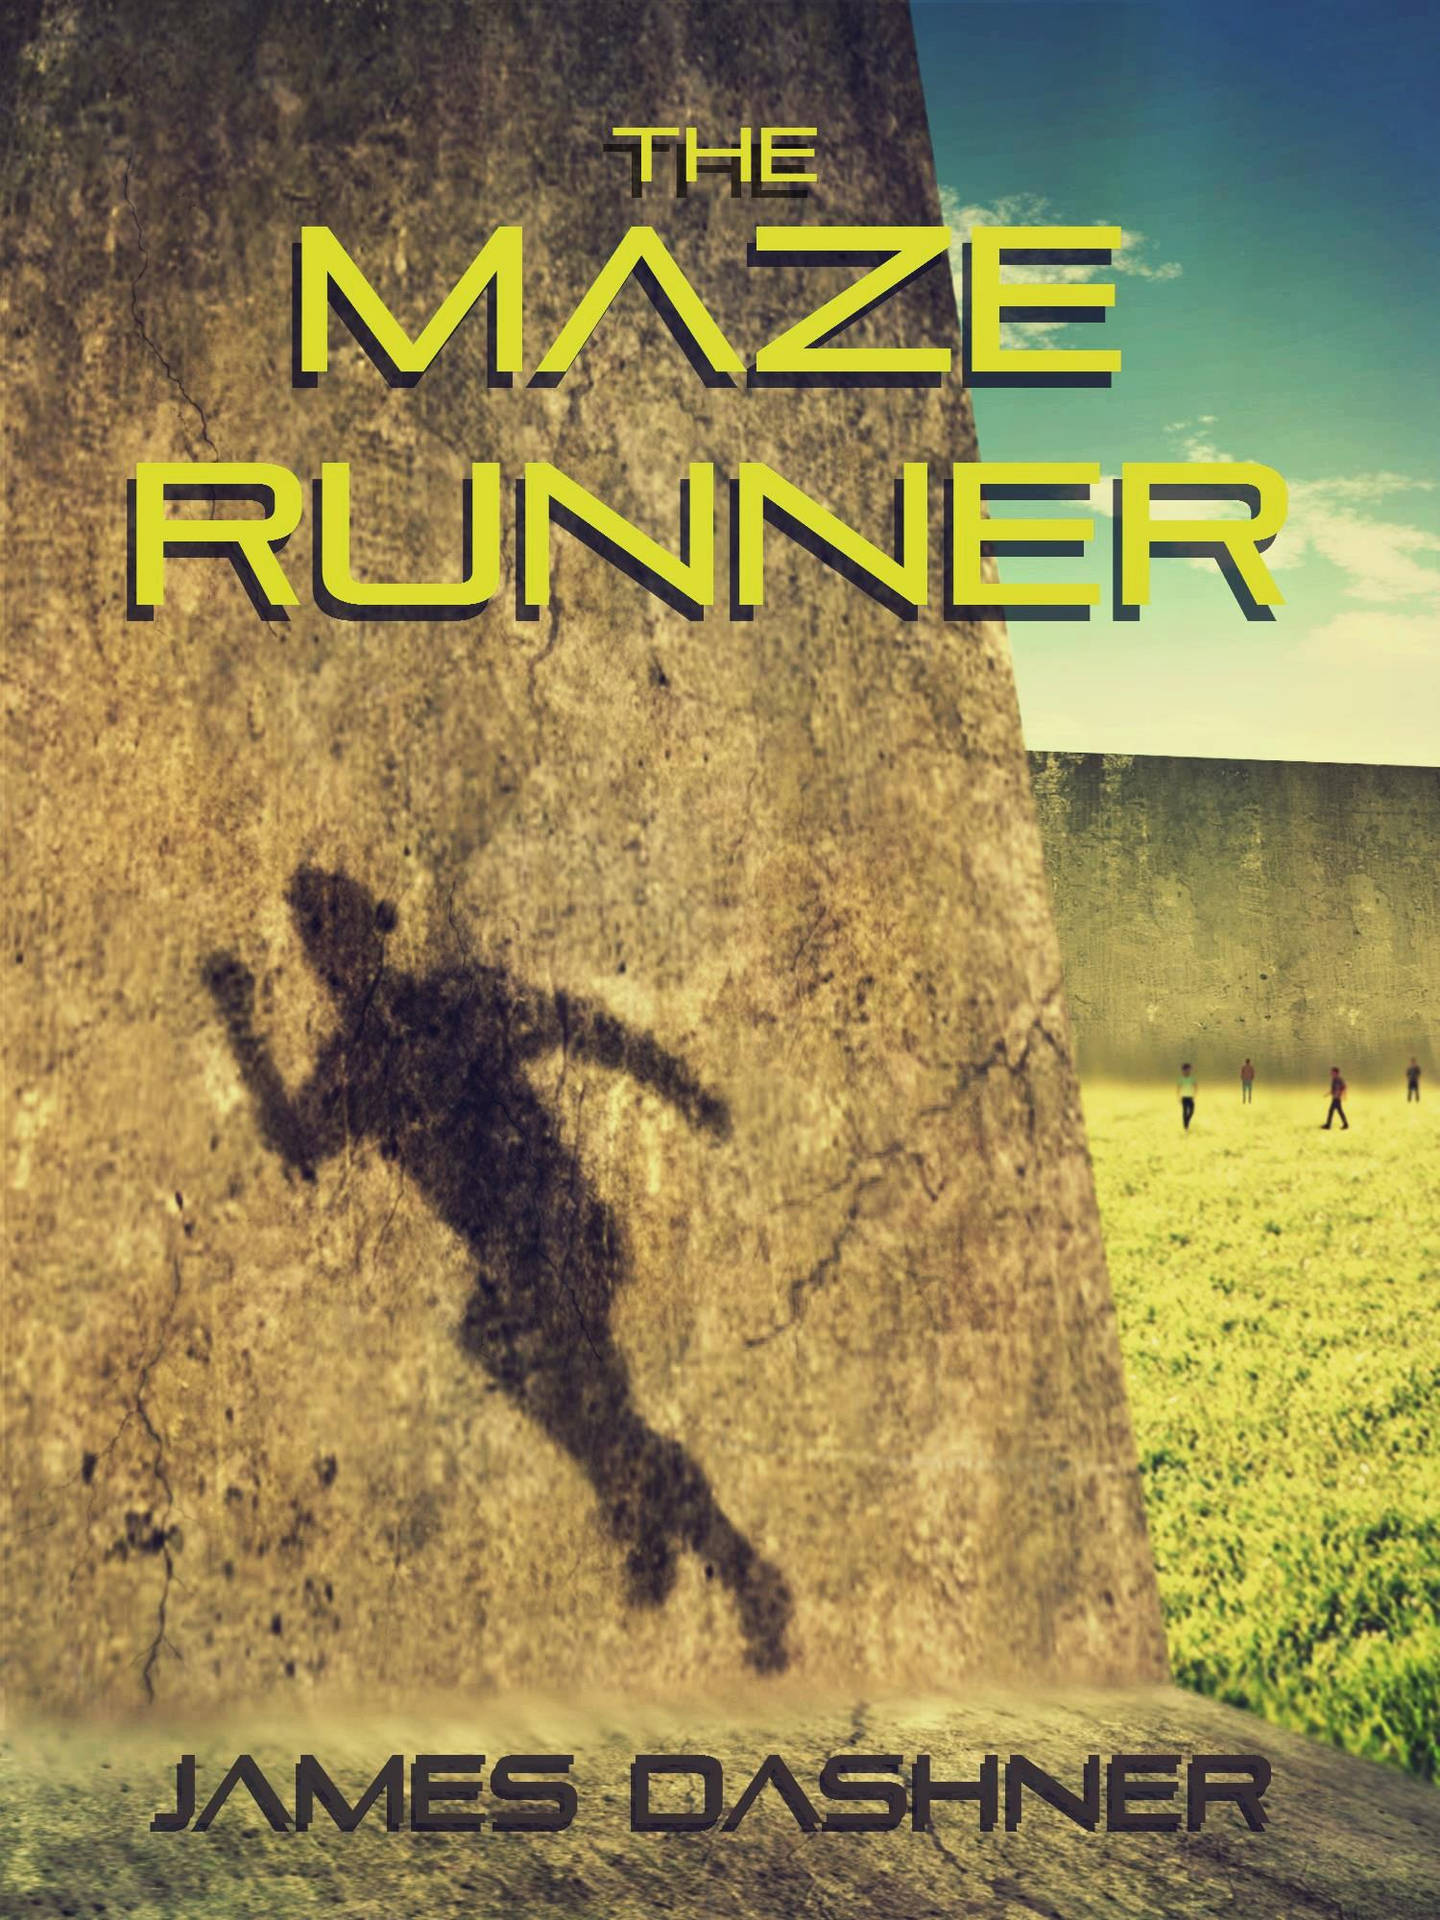 Download The Maze Runner James Dashner Wallpaper